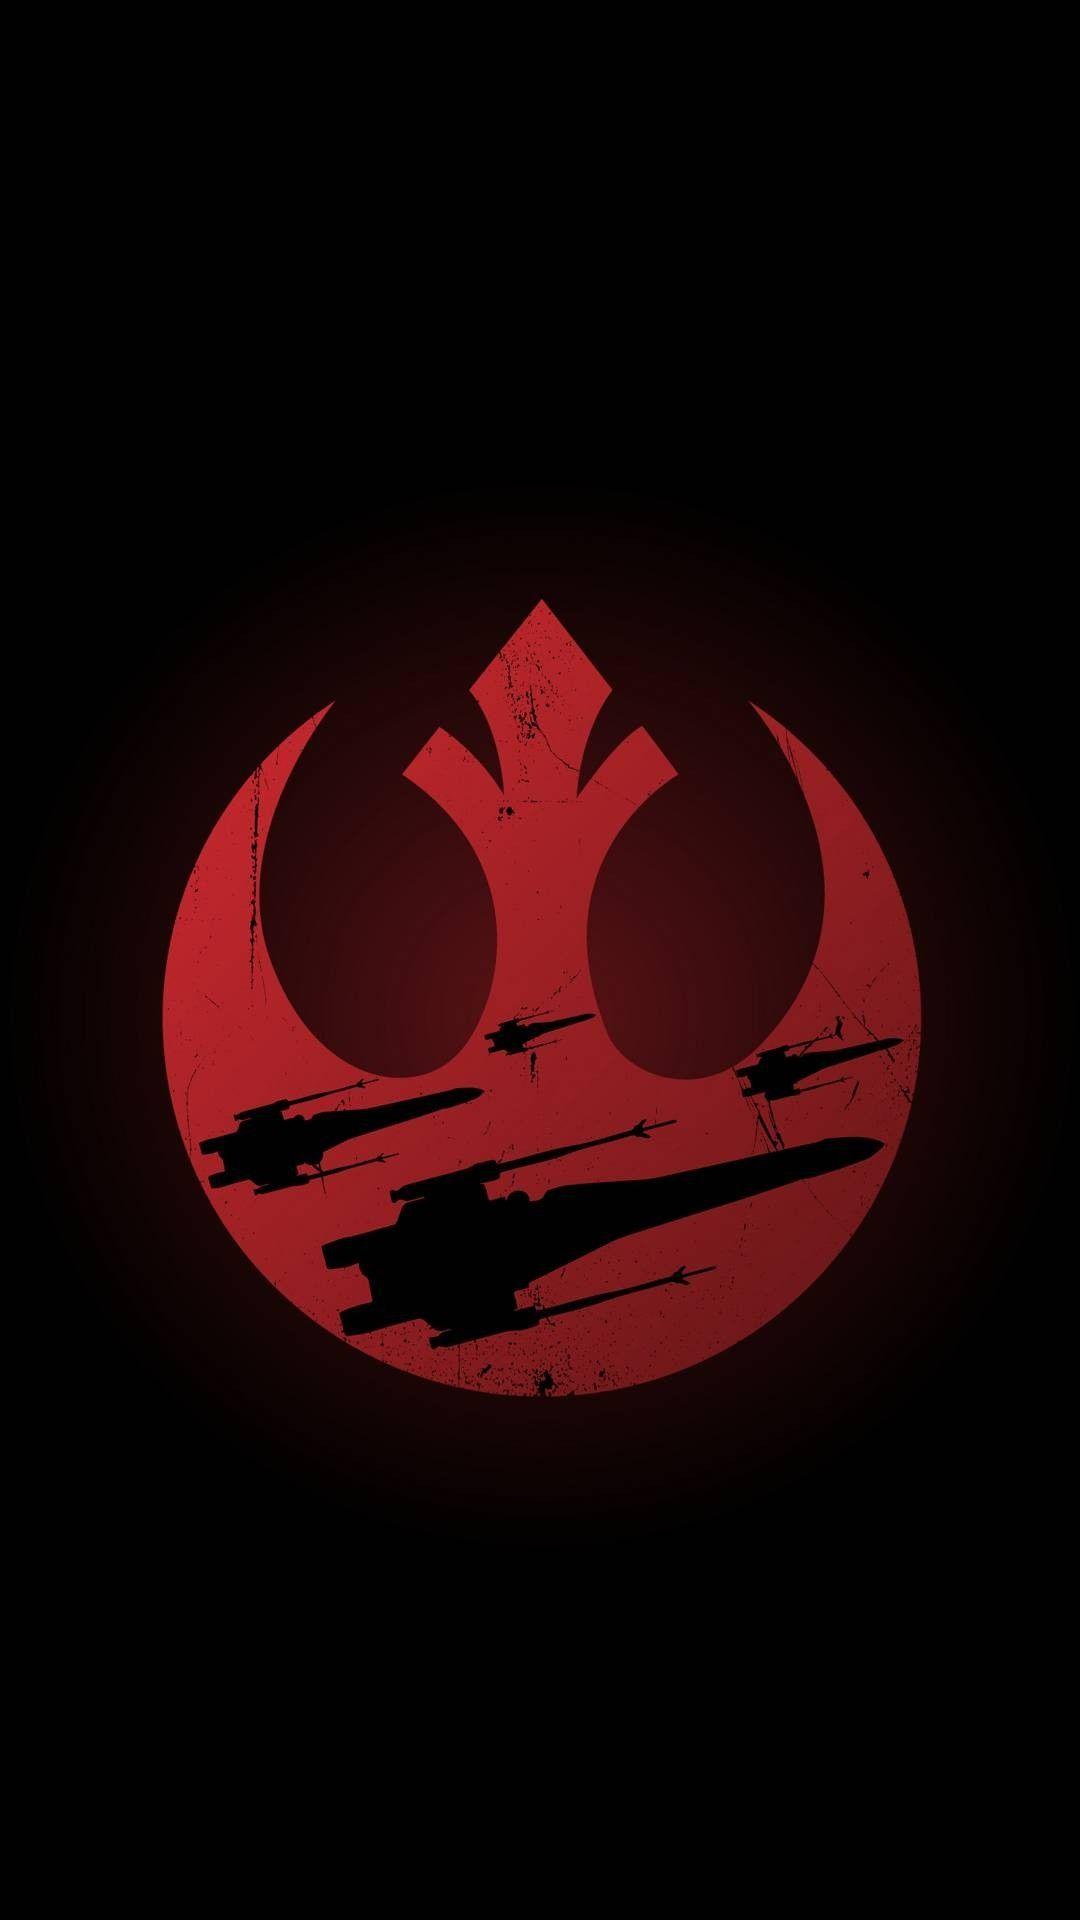 Alliance Star Wars iPhone Wallpaper Free Alliance